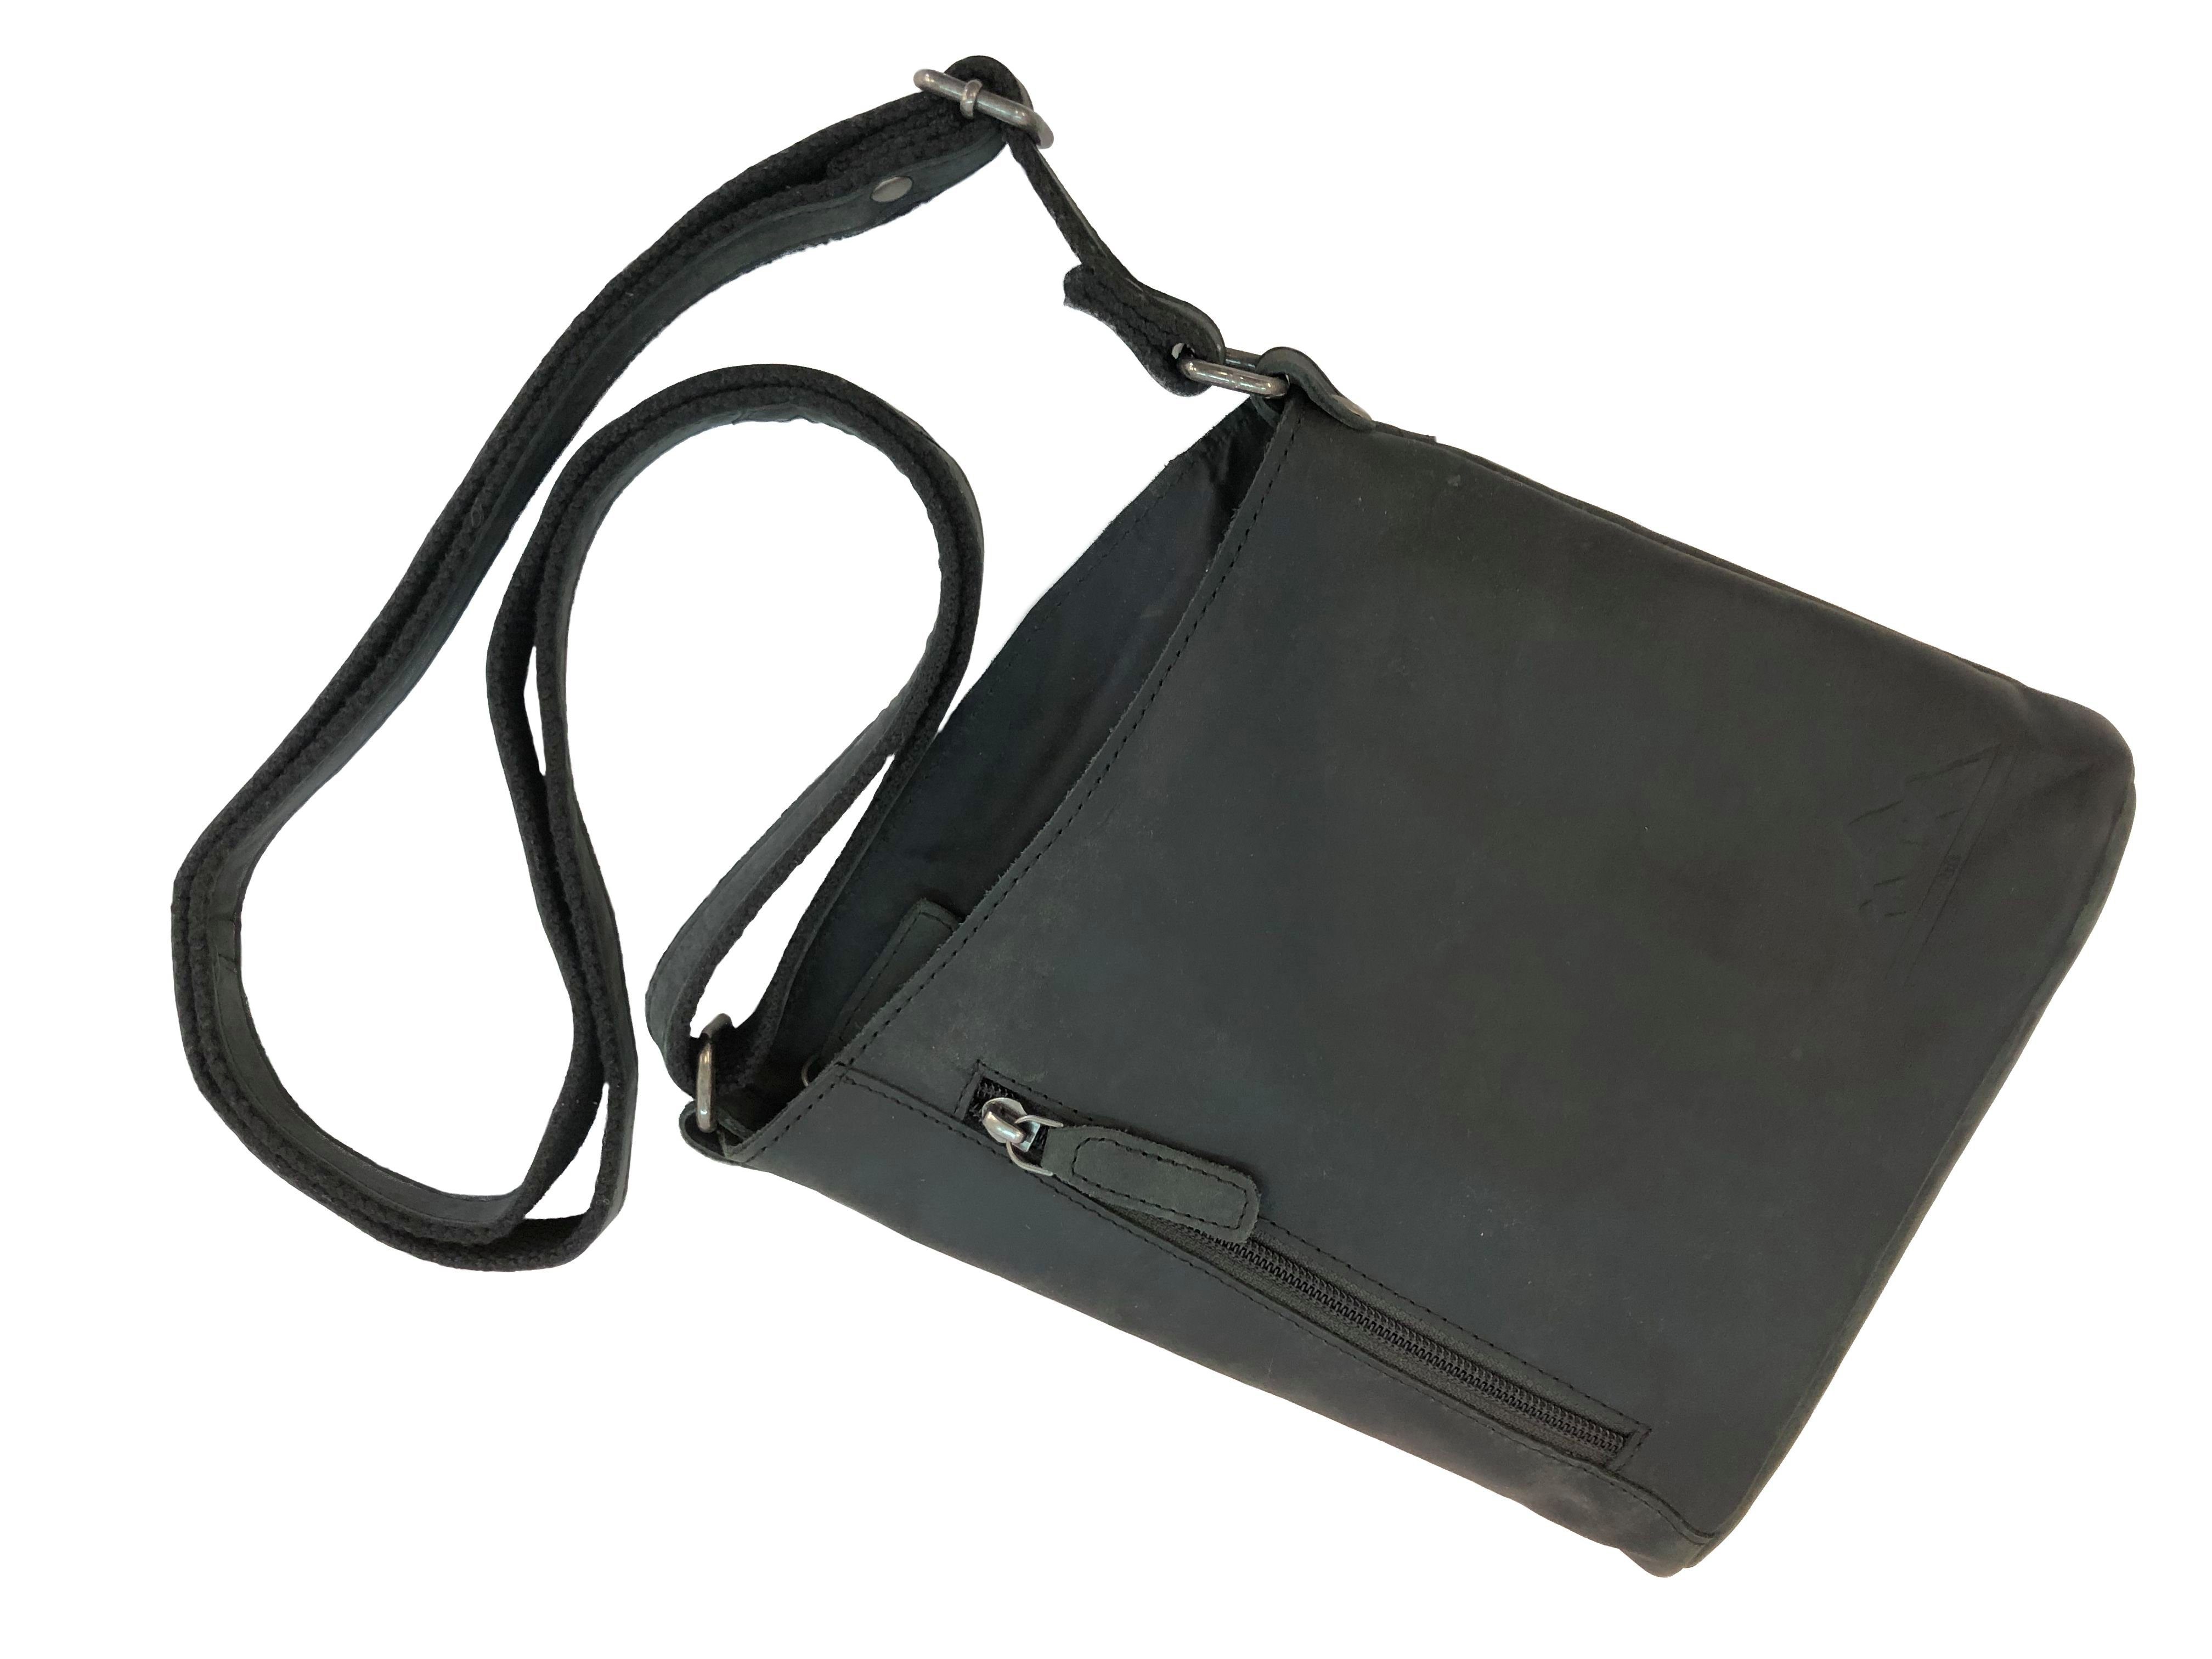 Vintage Ledertasche Handtasche Umhängetasche Bag PAULA, Black Bag Crossbody Bayern